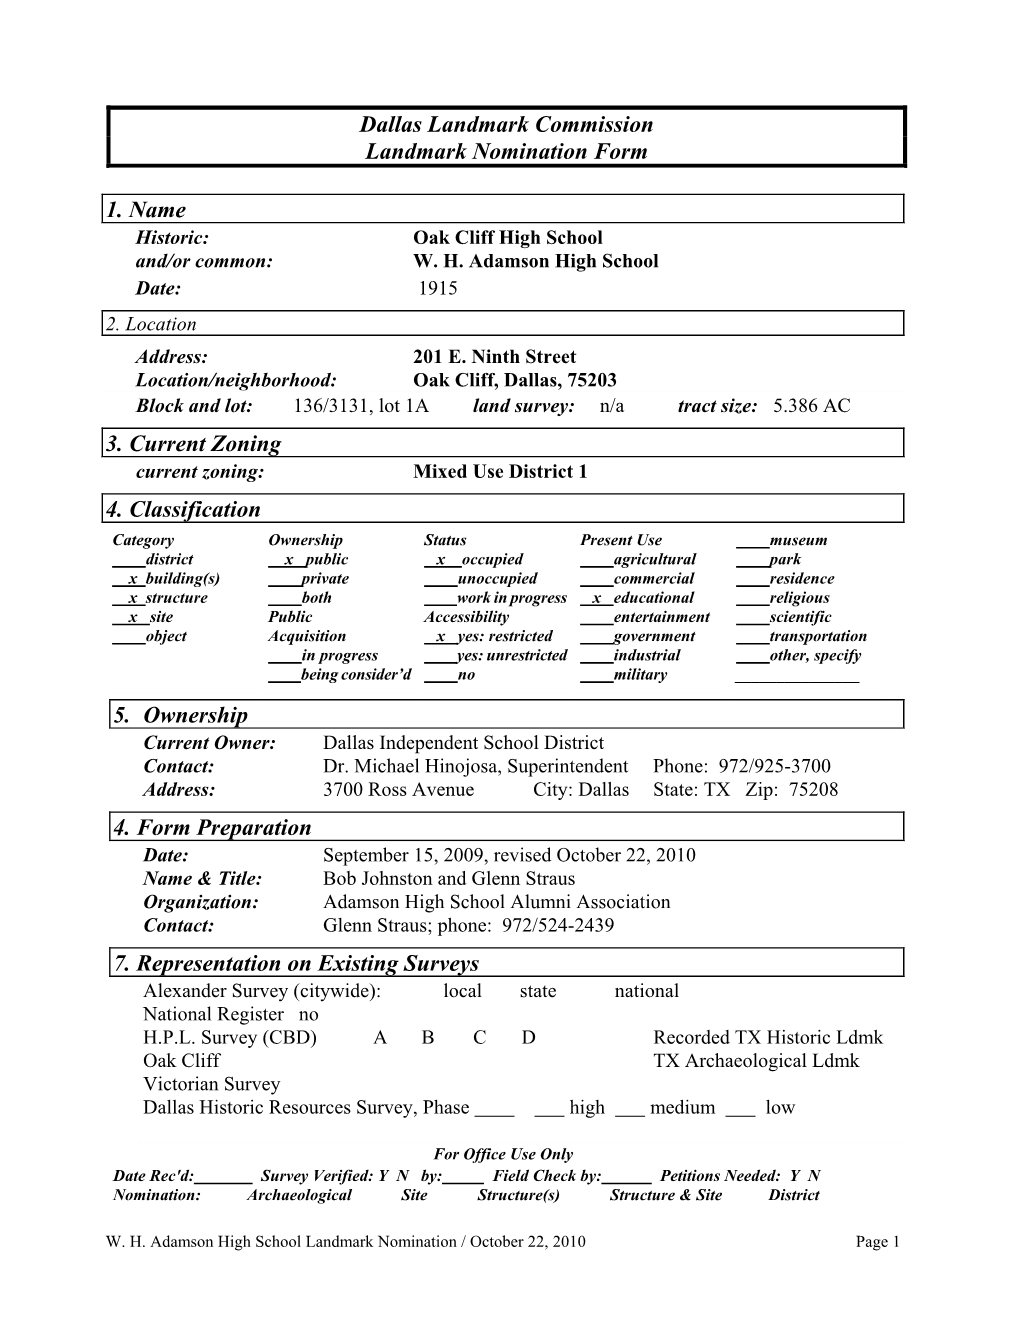 W.H. Adamson High School Landmark Nomination Form